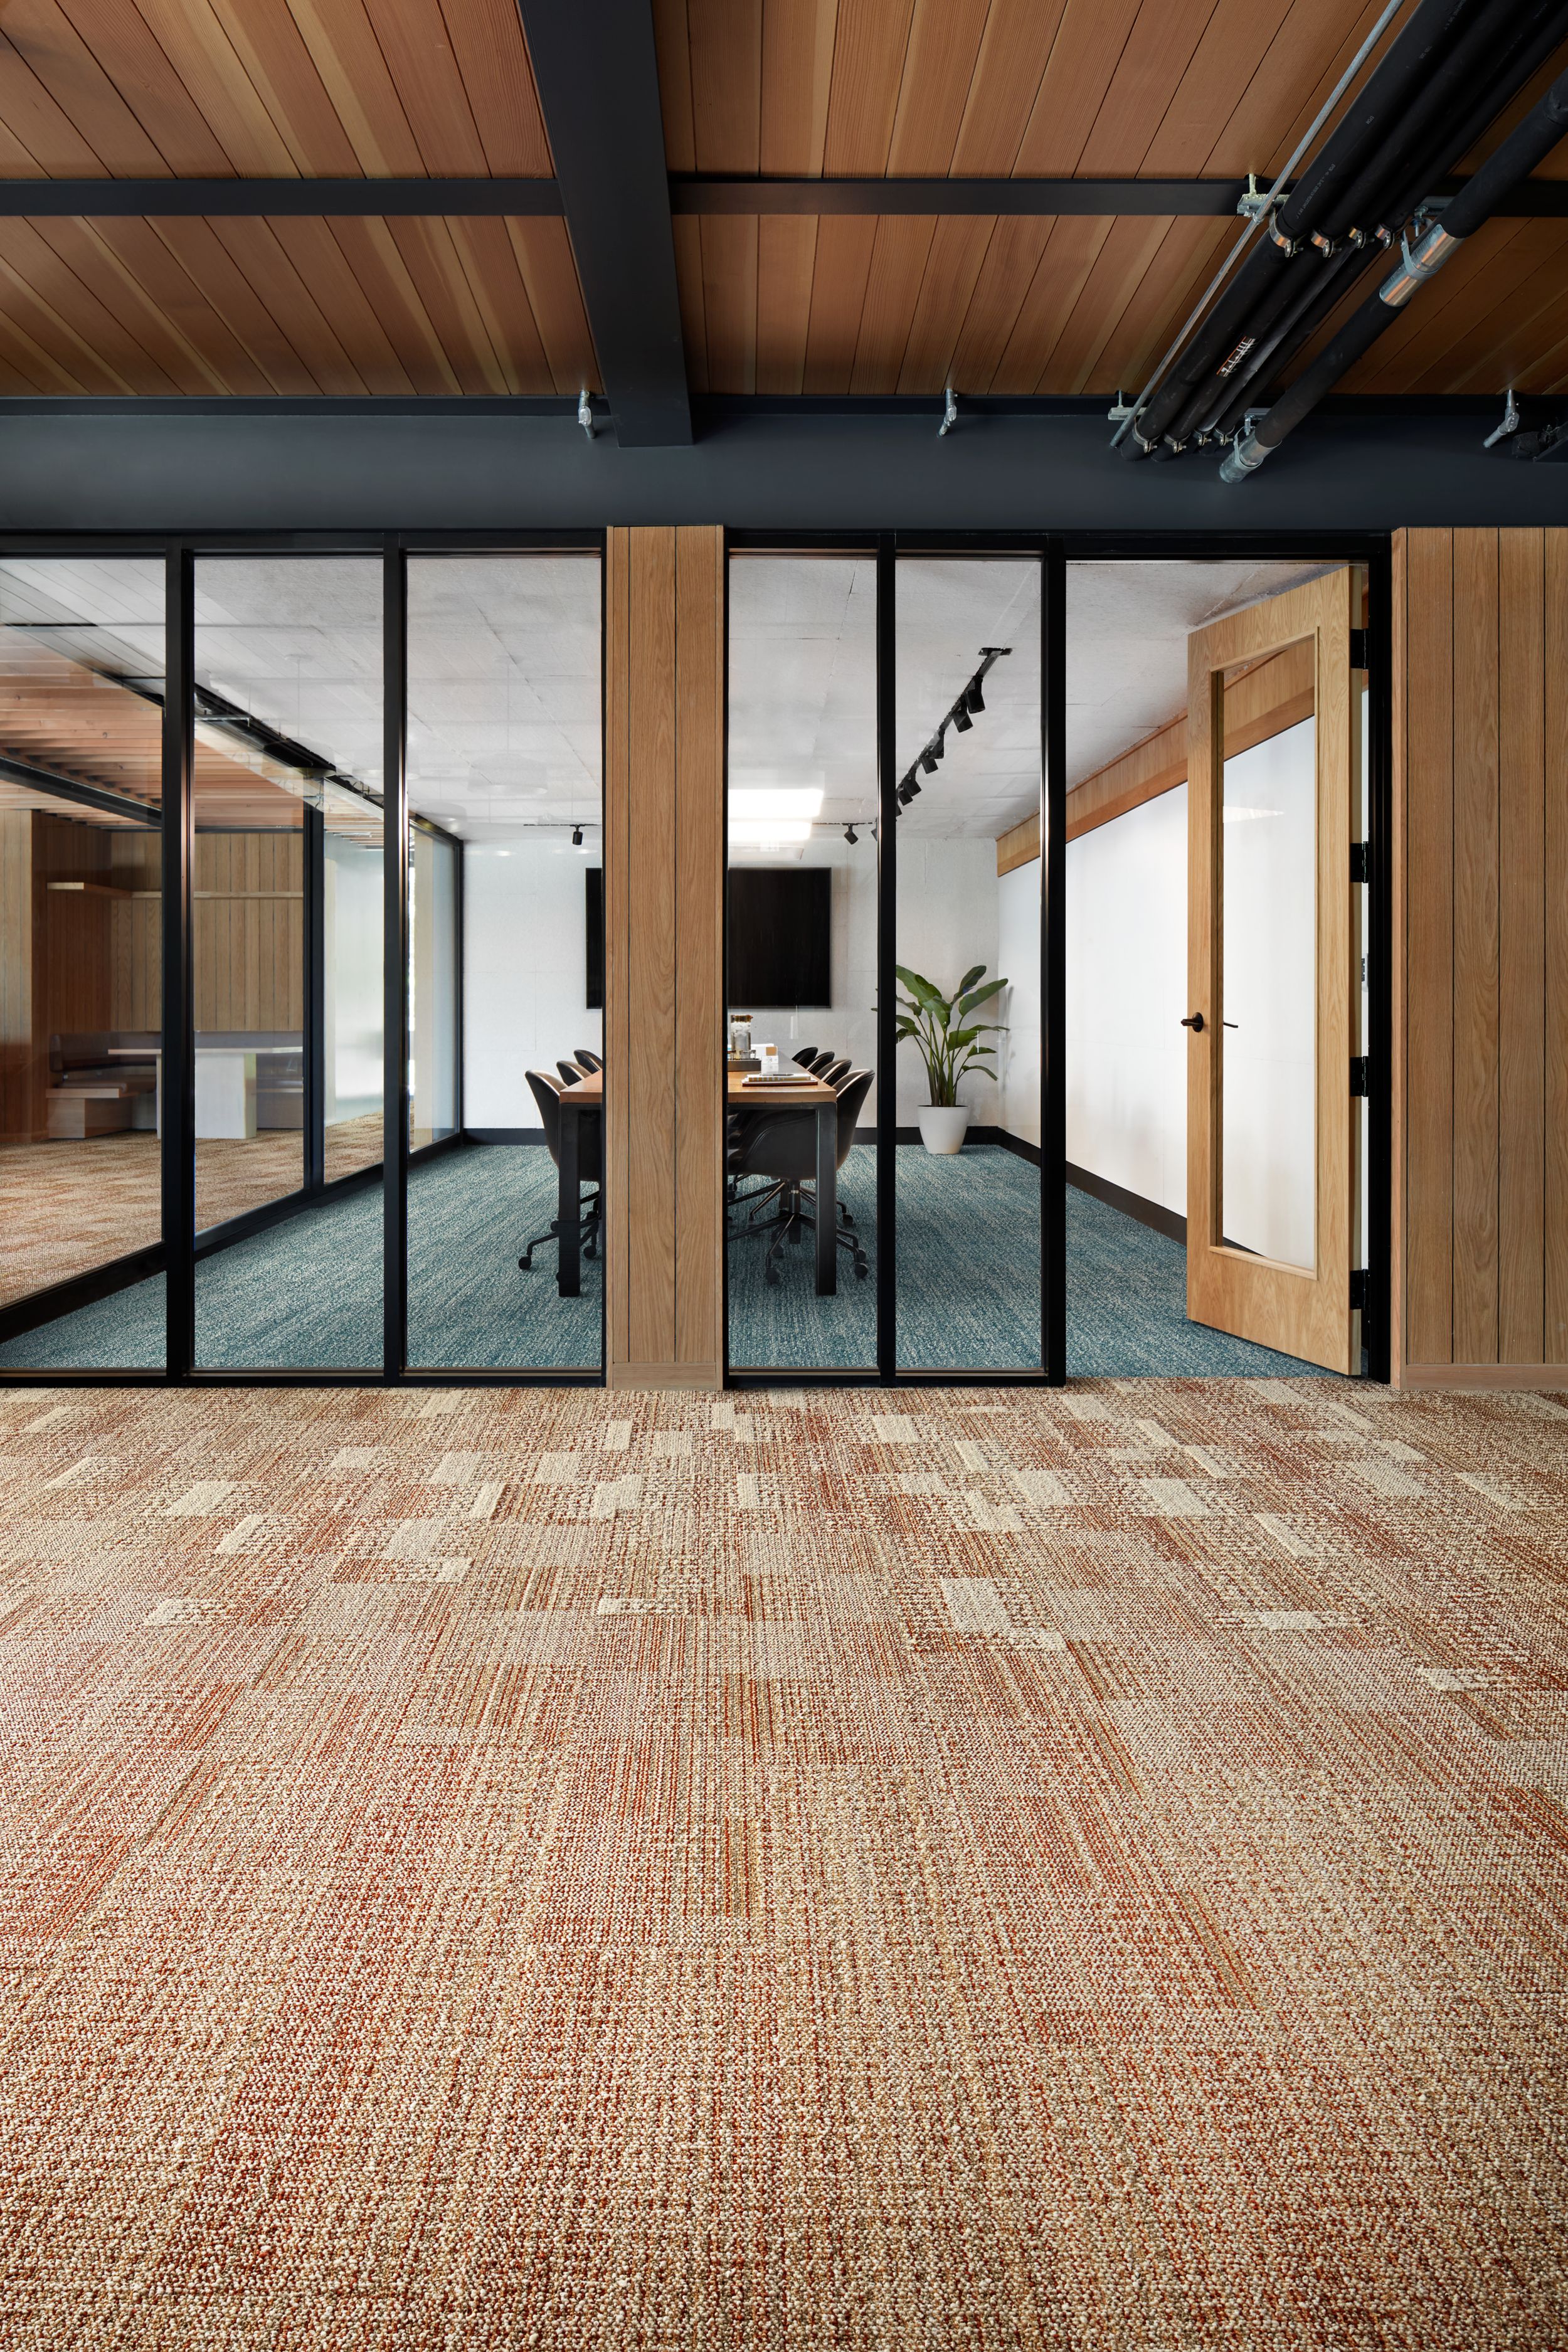 Interface Dot 2 Dot, Dot O-Mine and Diddley Dot plank carpet tile in meeting room imagen número 5